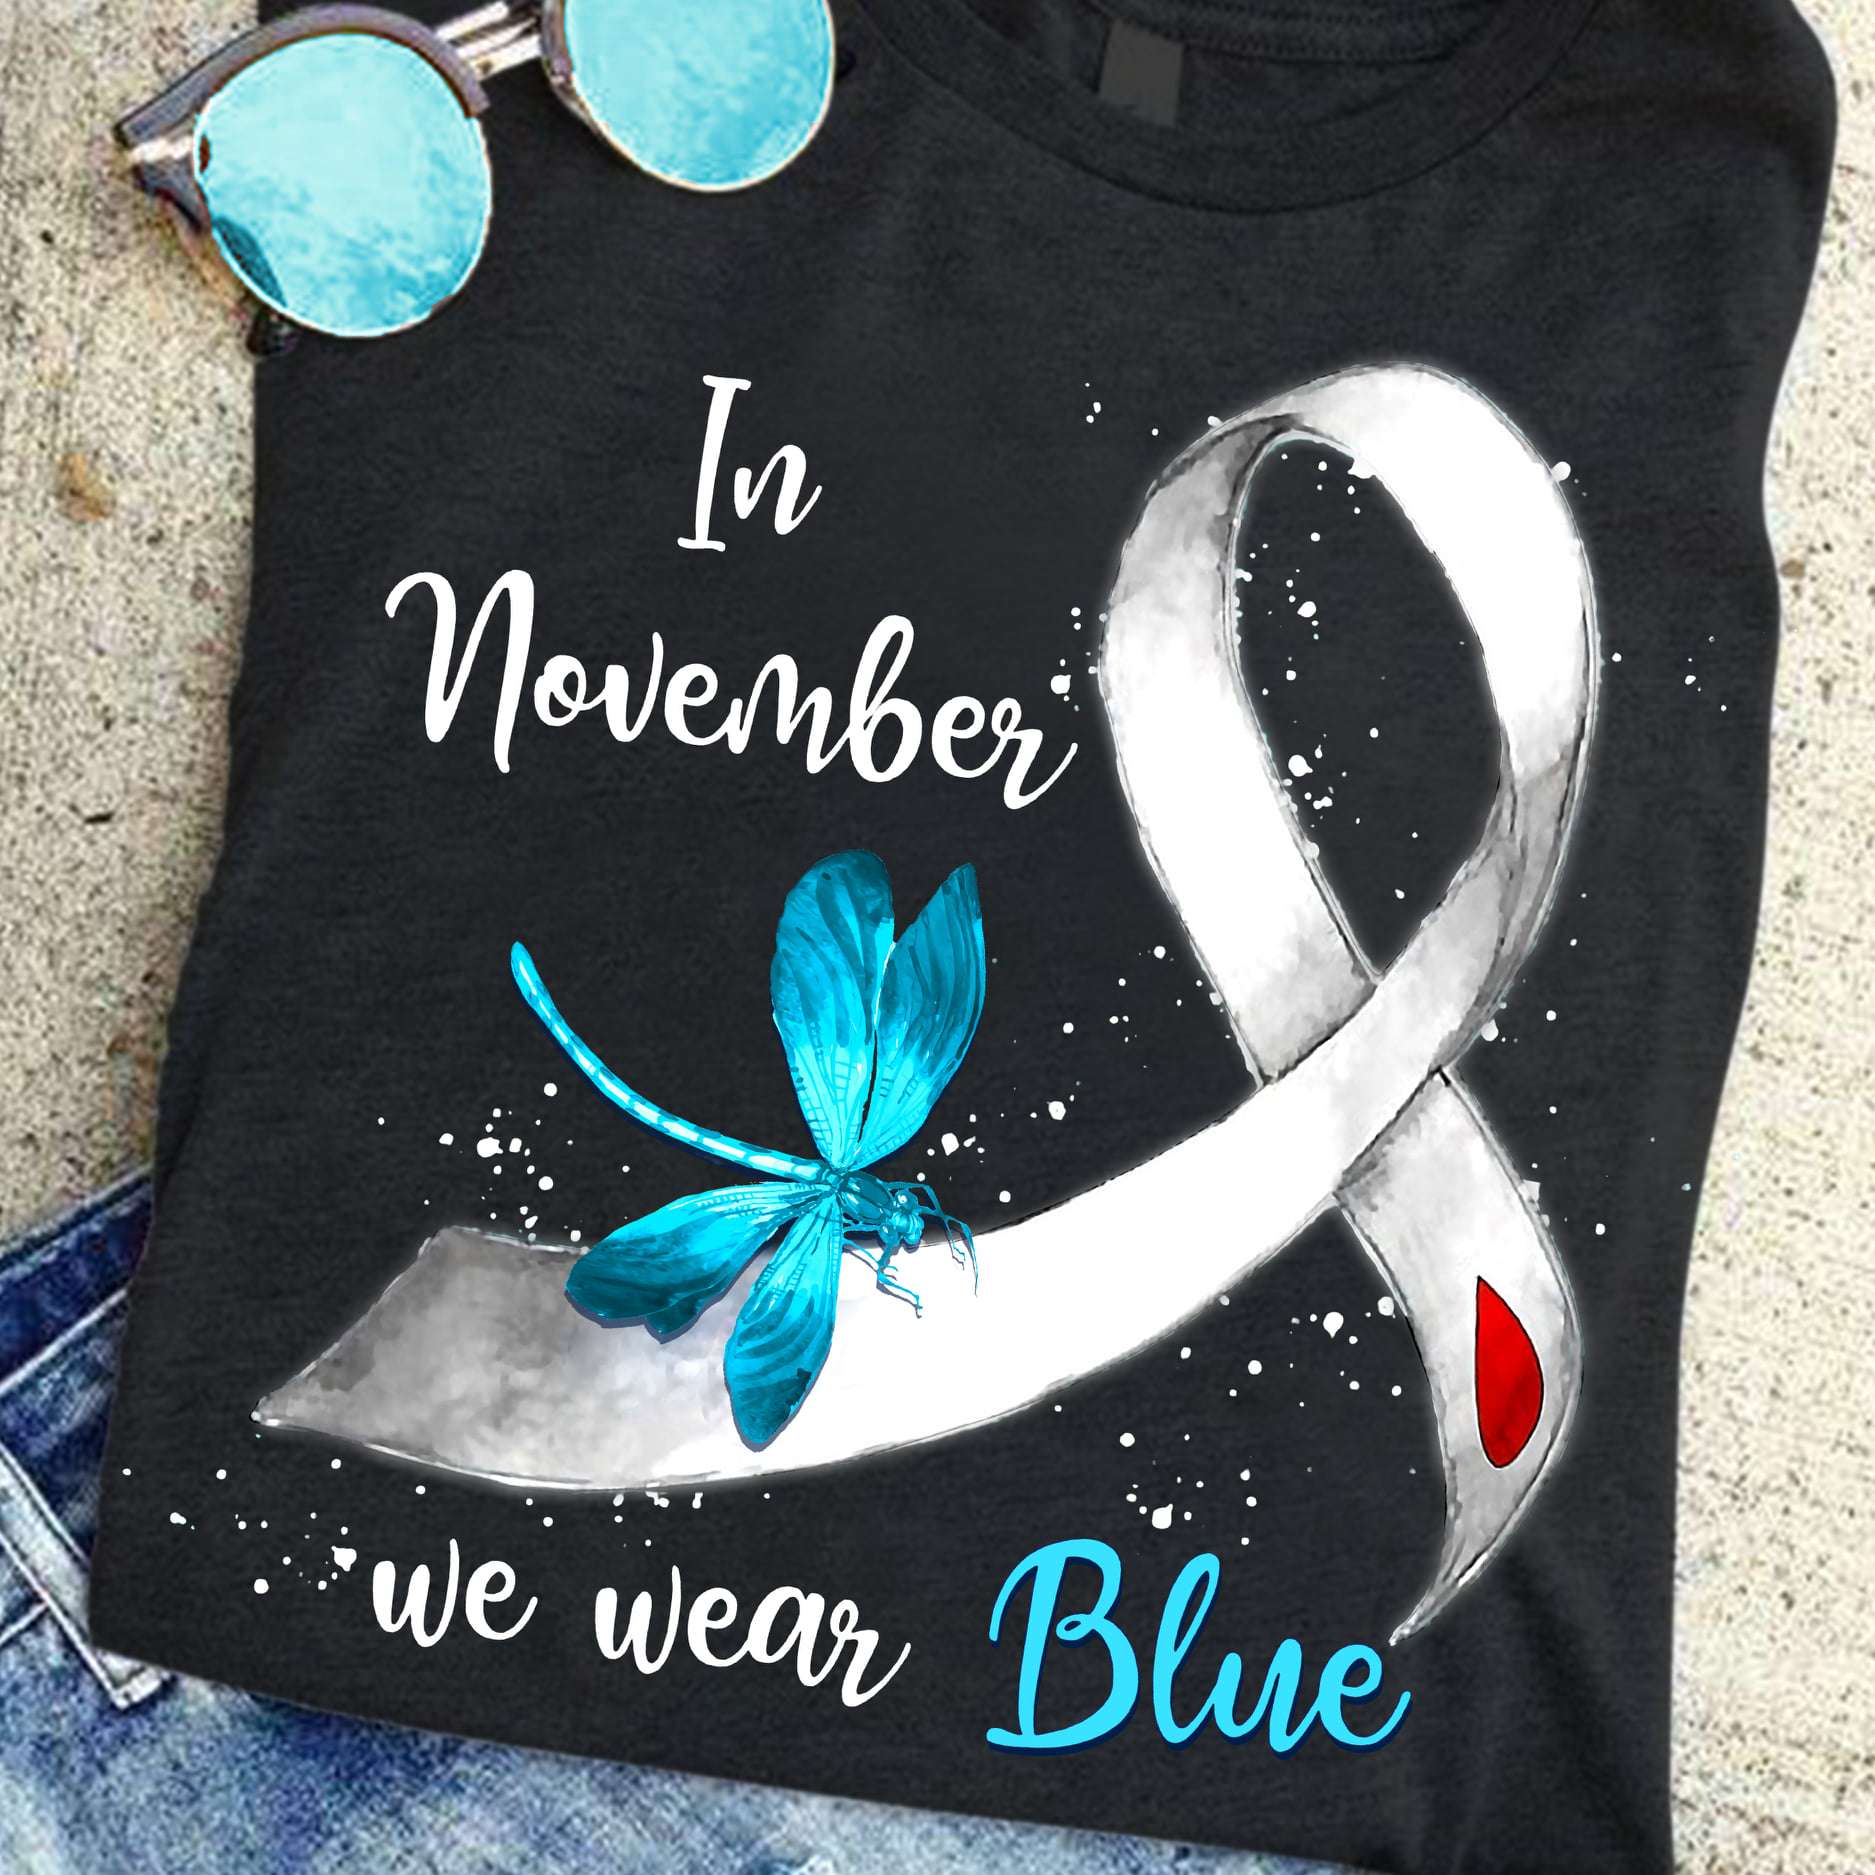 Dragonfly Ribbon Diabetes - In november we wear blue